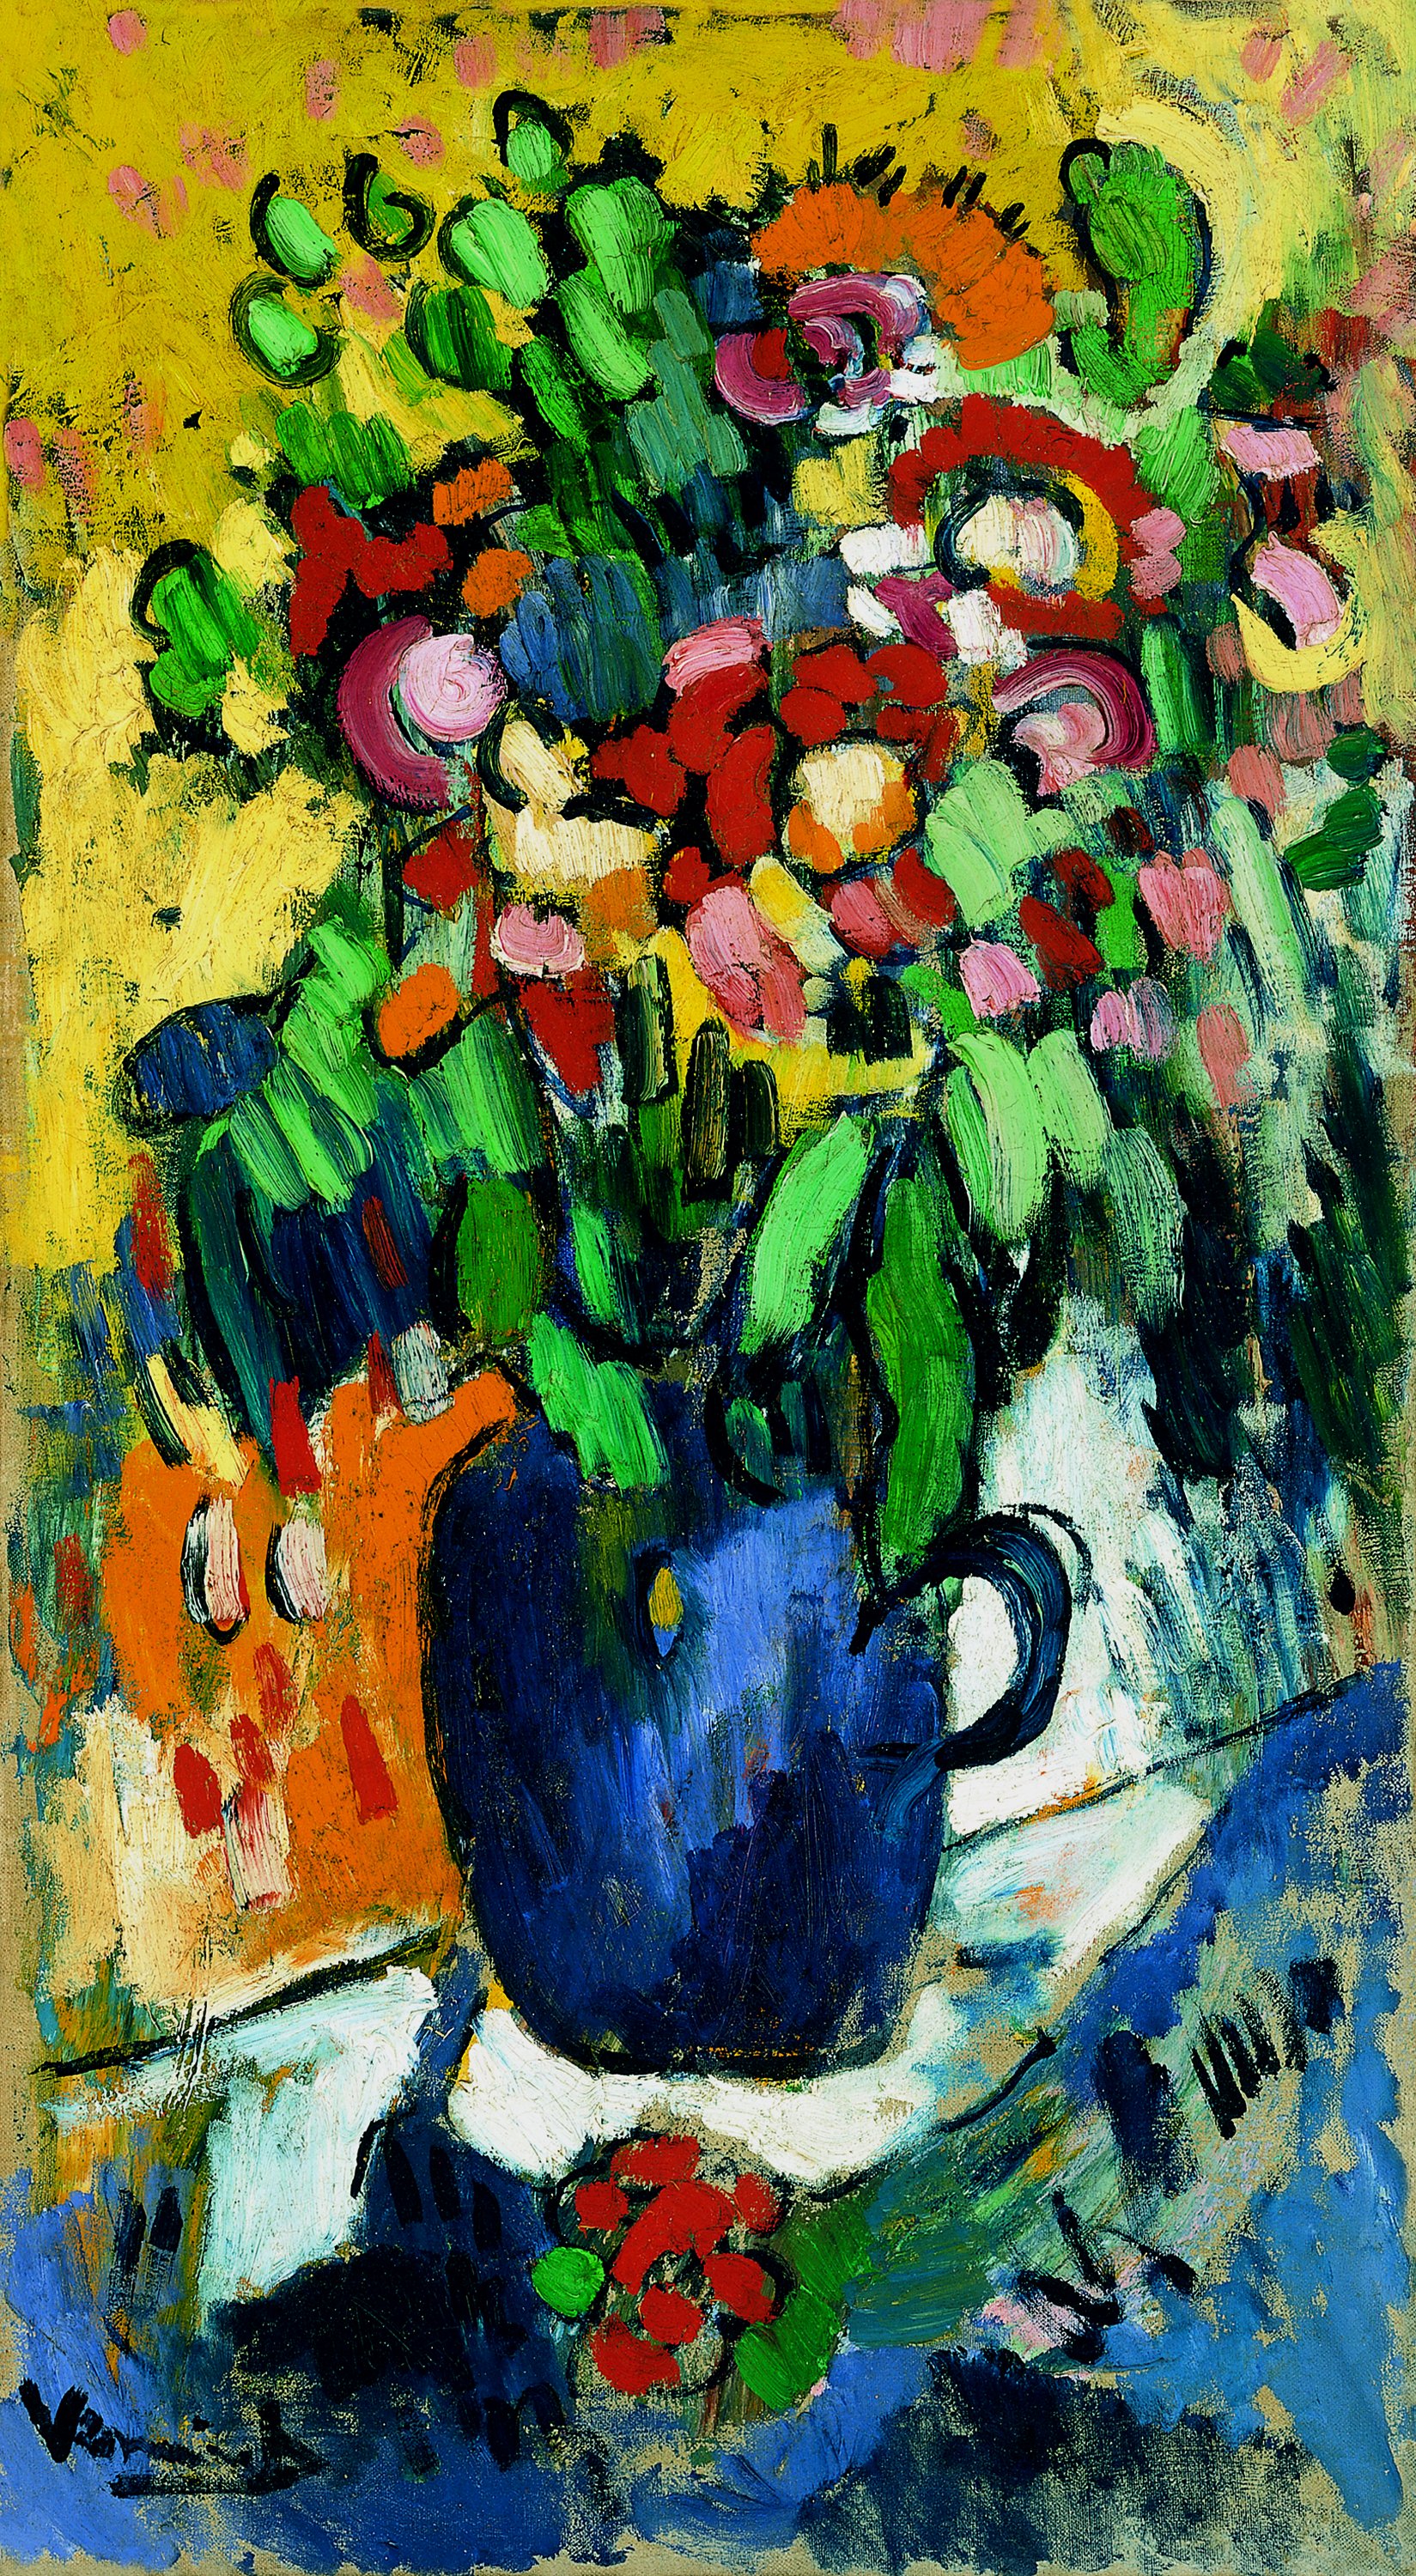 Blue vase with flowers. Jarrón azul con flores, c. 1906